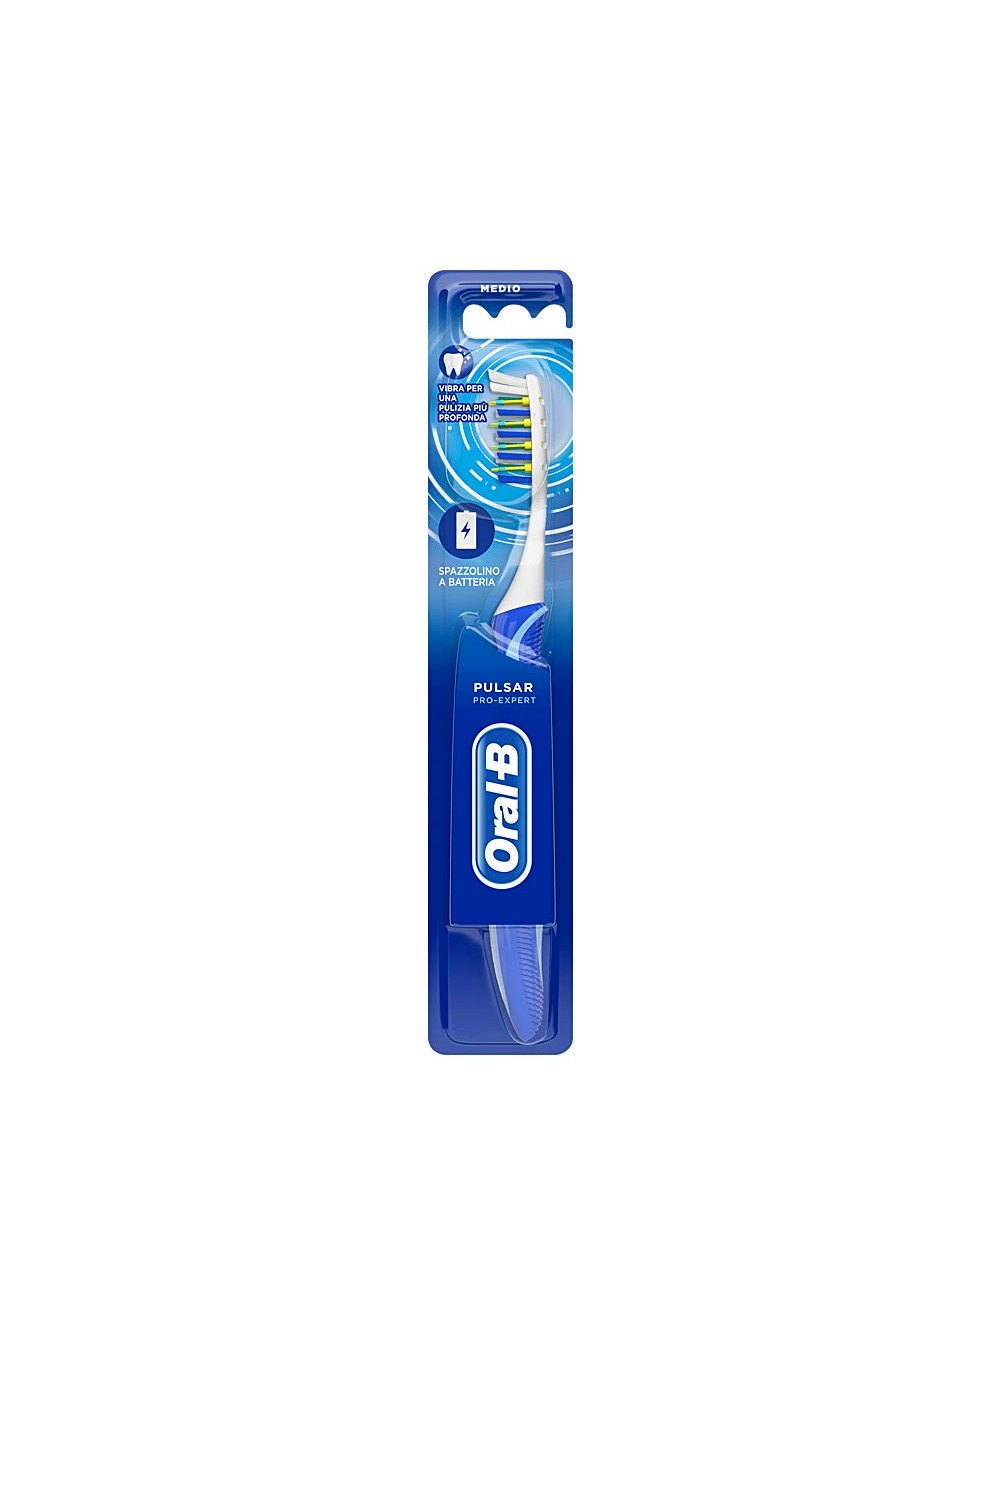 ORAL-B - Oral B Toothbrush Battery Expert Pulsar 35